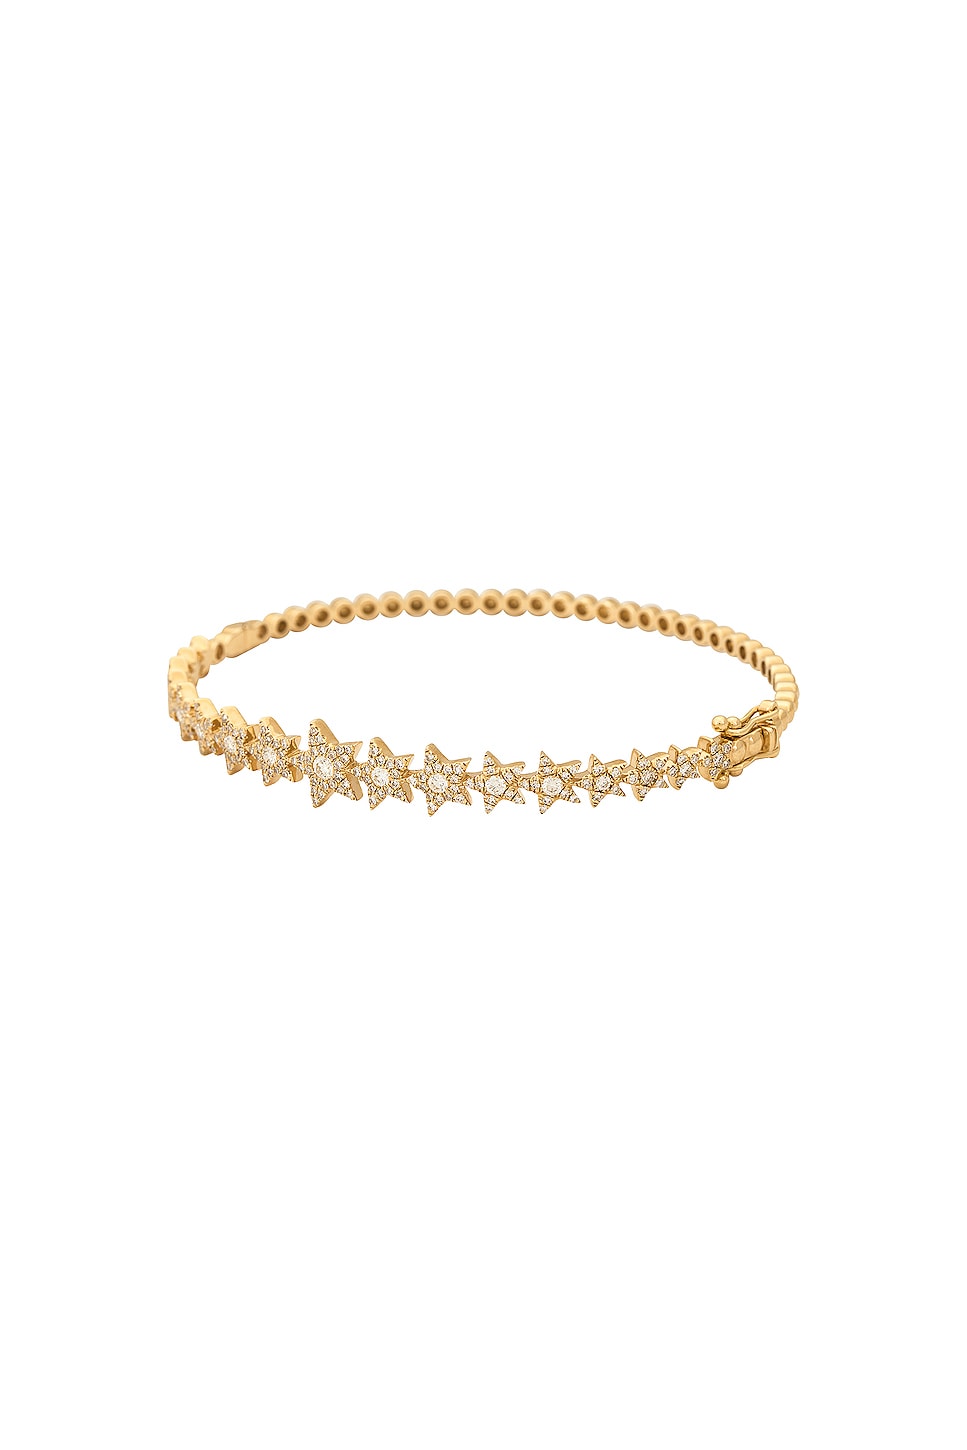 Image 1 of Siena Jewelry Star Bangle Bracelet in 14k Yellow Gold & Diamond